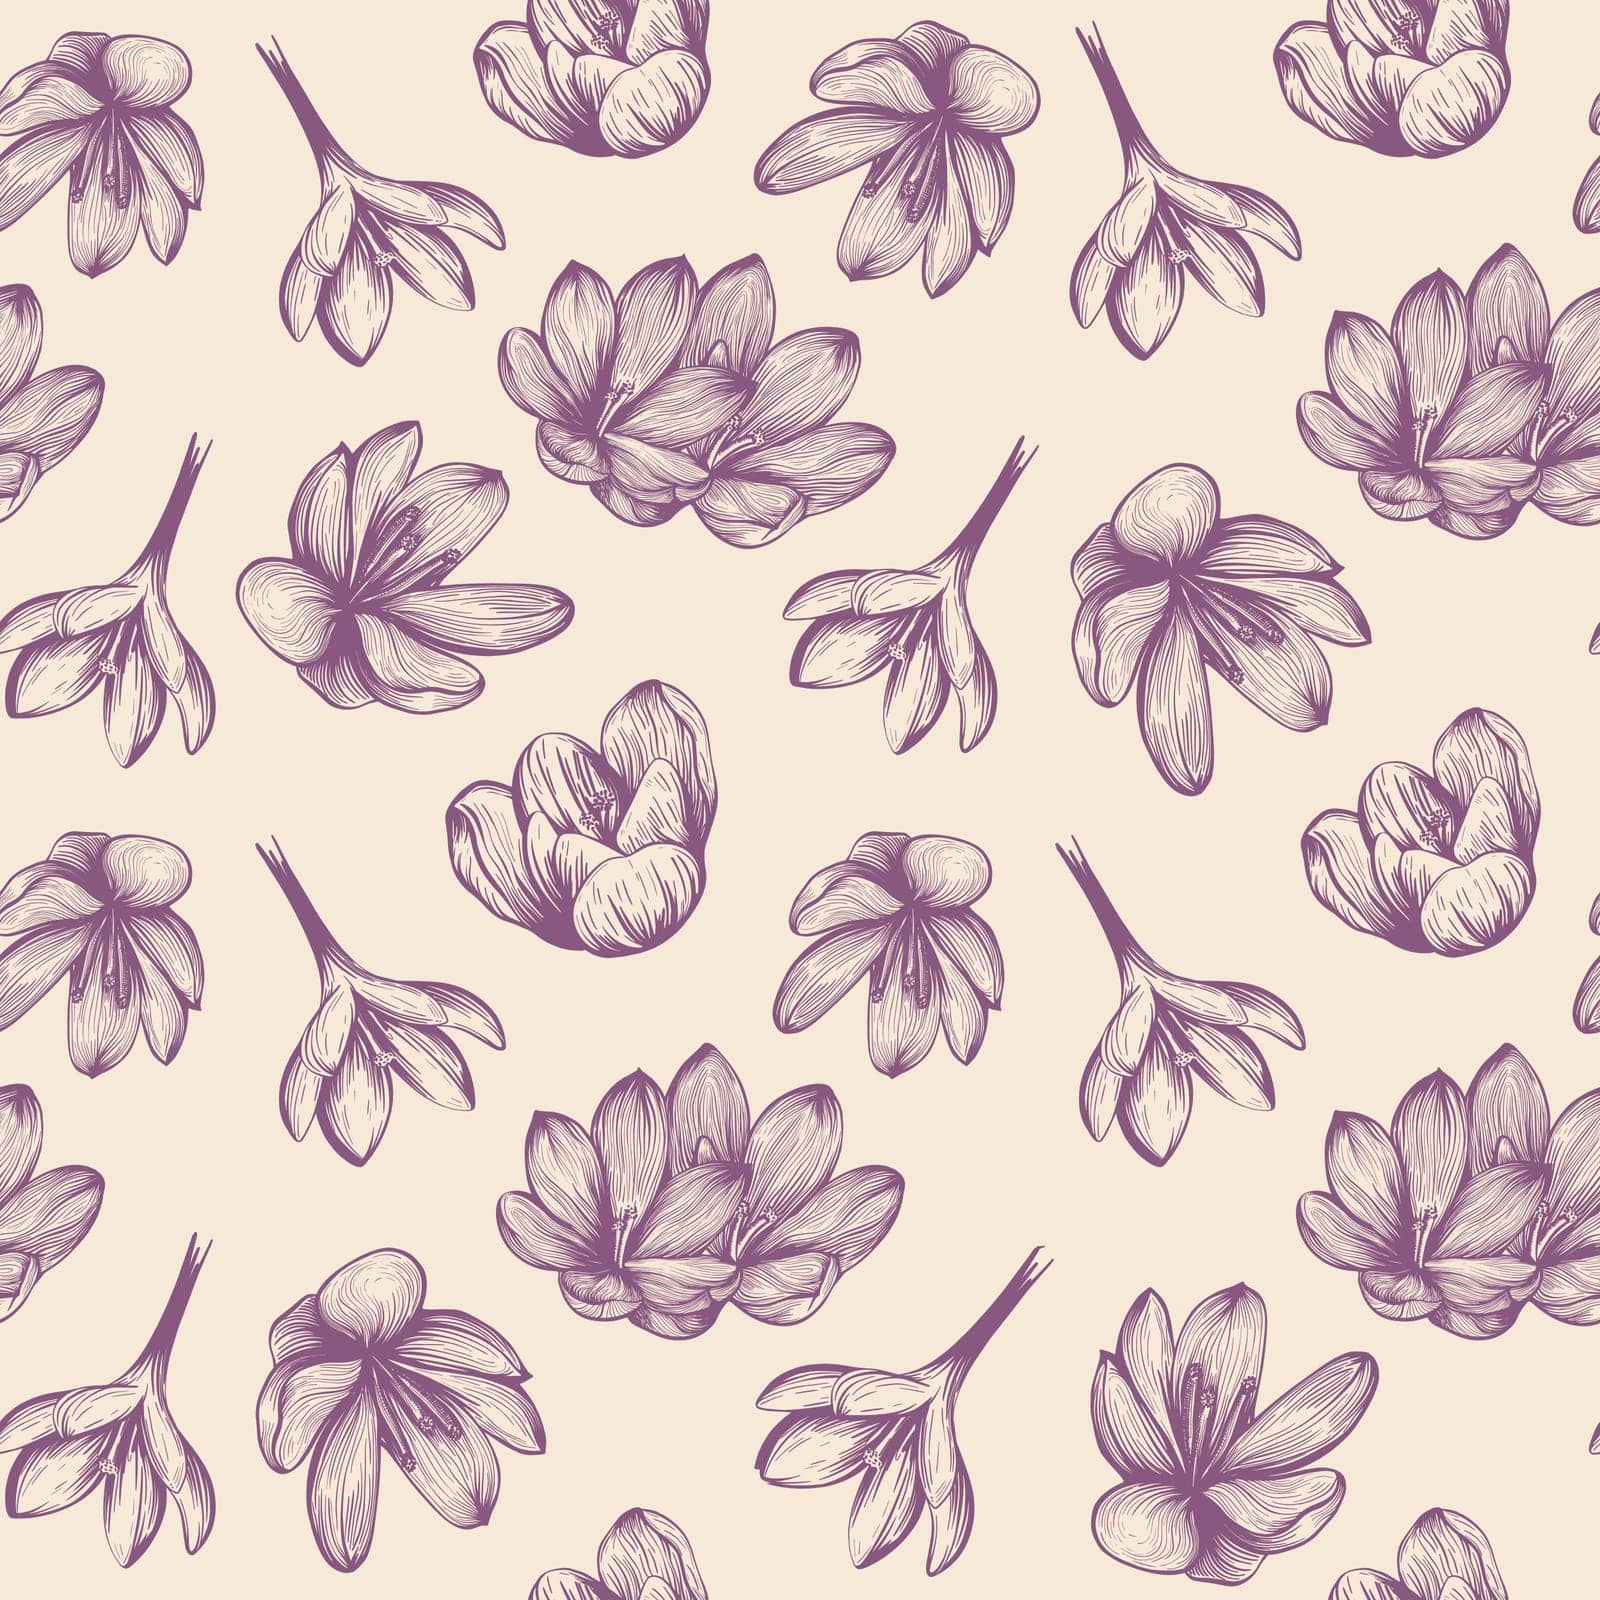 Saffron pattern sketch. Crocus flower pattern by Dustick